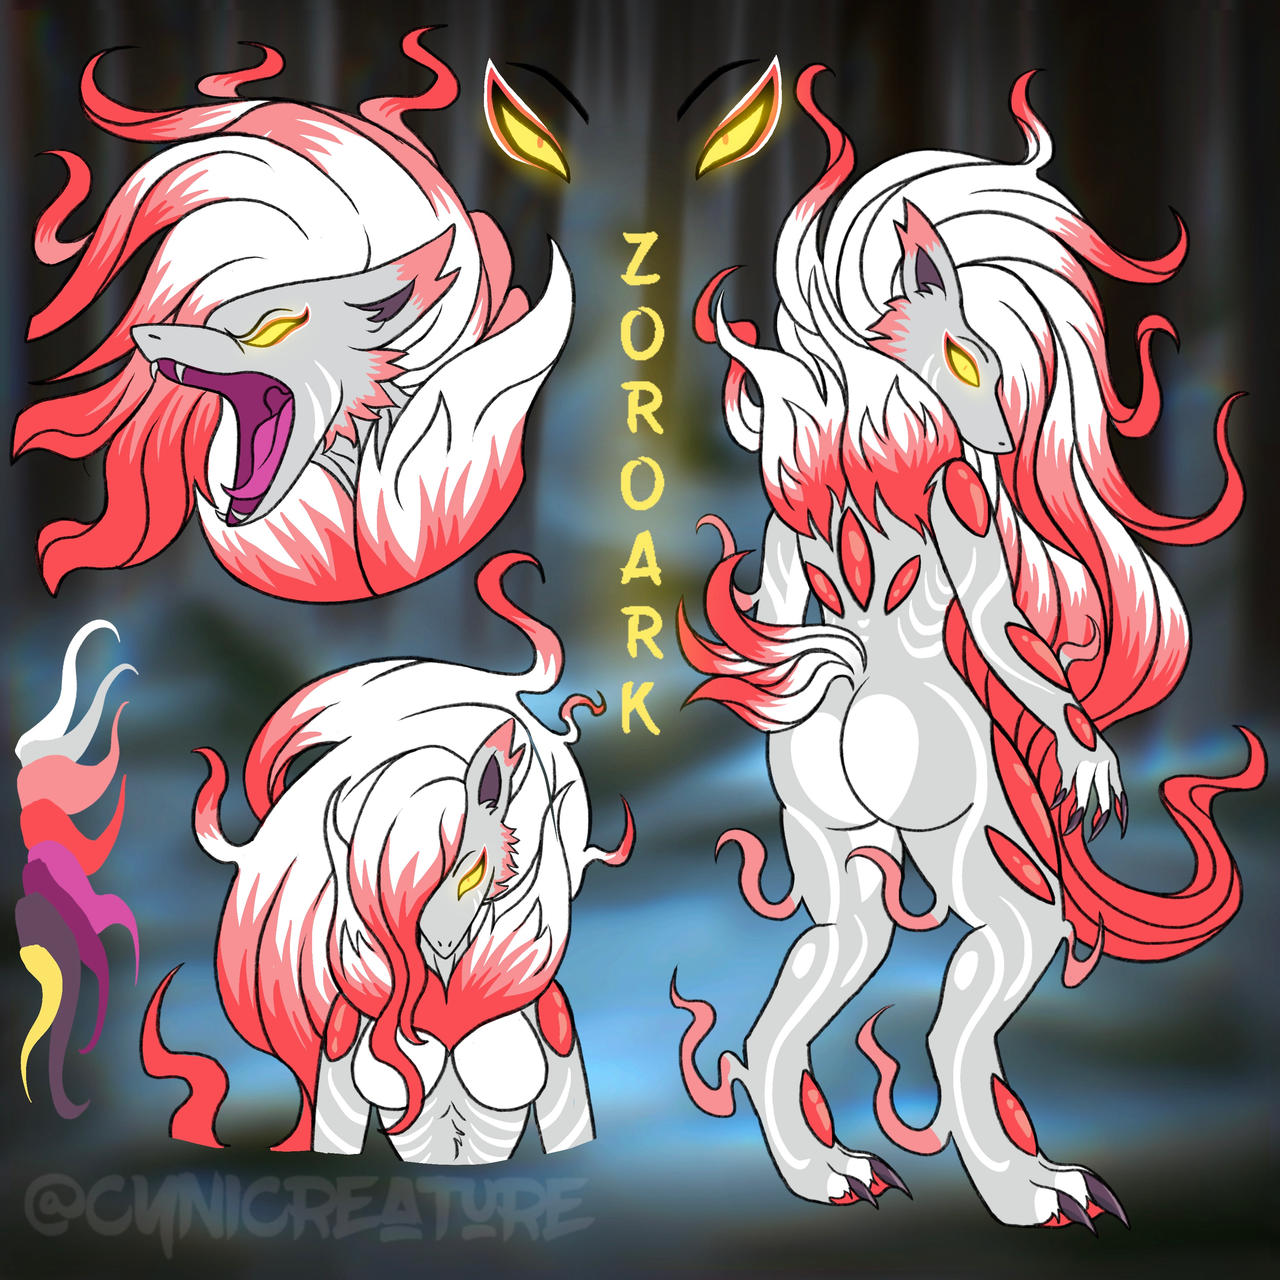 Hybrid form Zoro by yousuckthiscock on DeviantArt